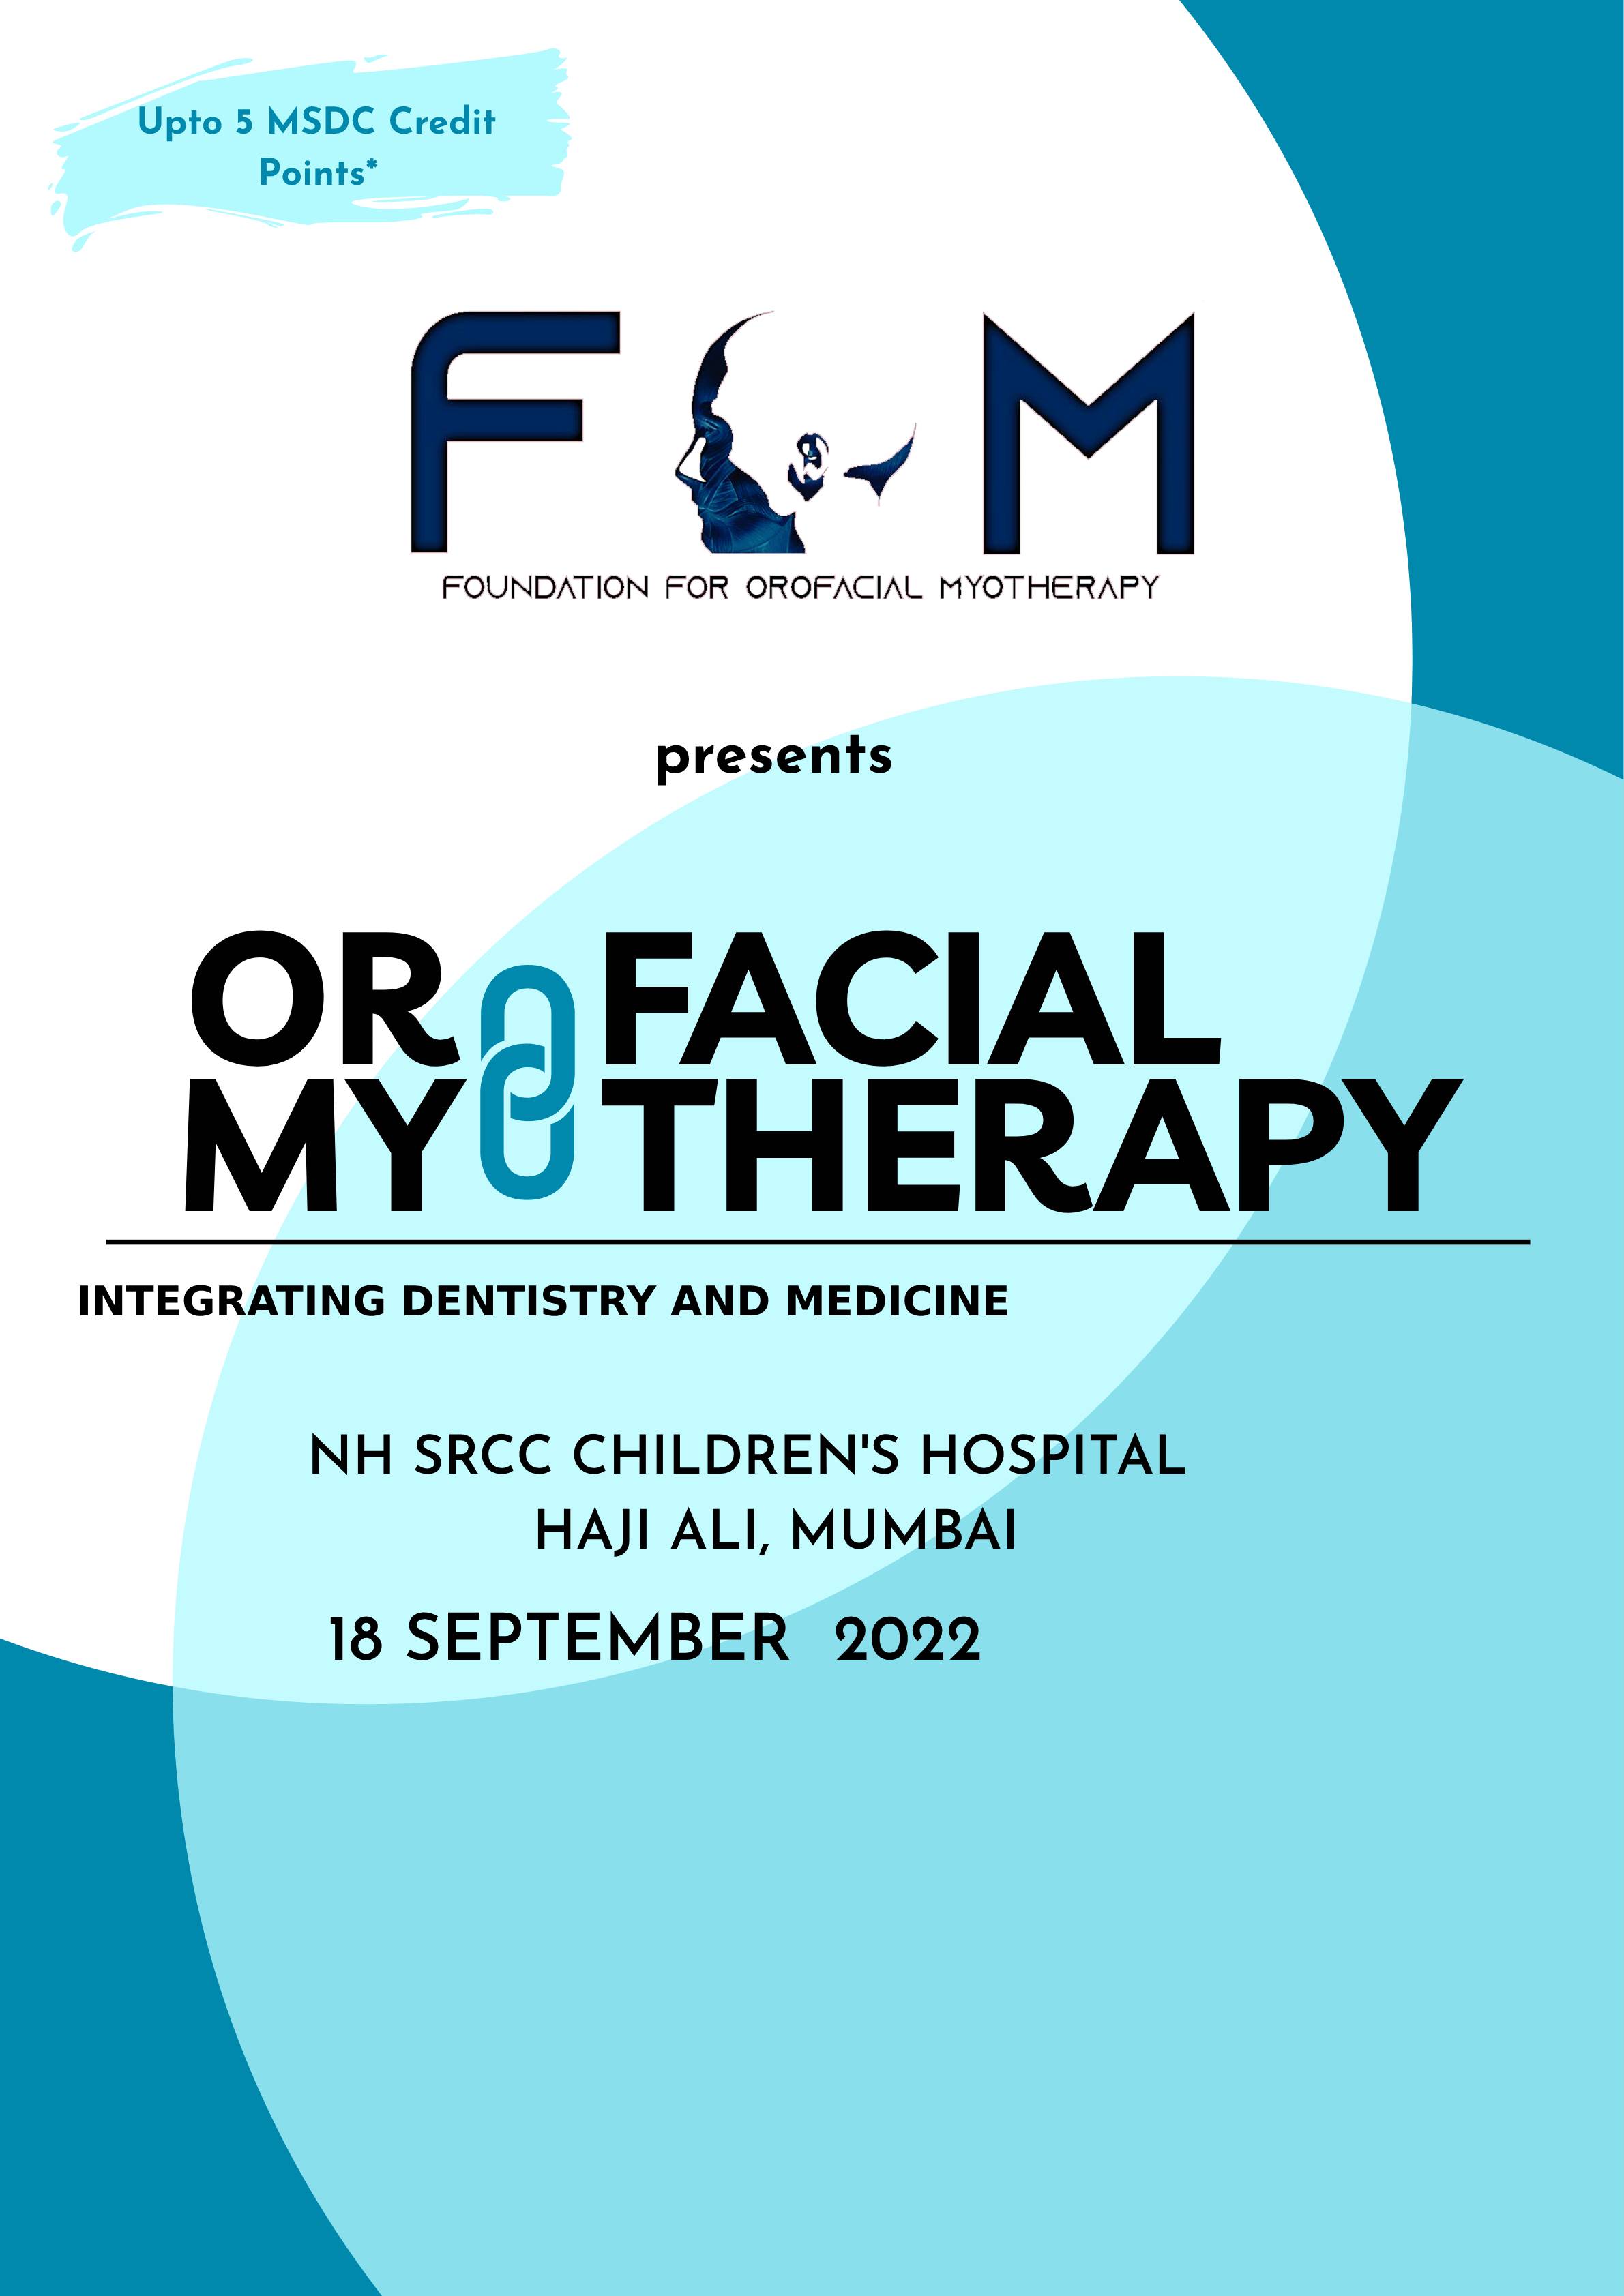 Orofacial Myotherapy, Integrating dentistry and medicine 